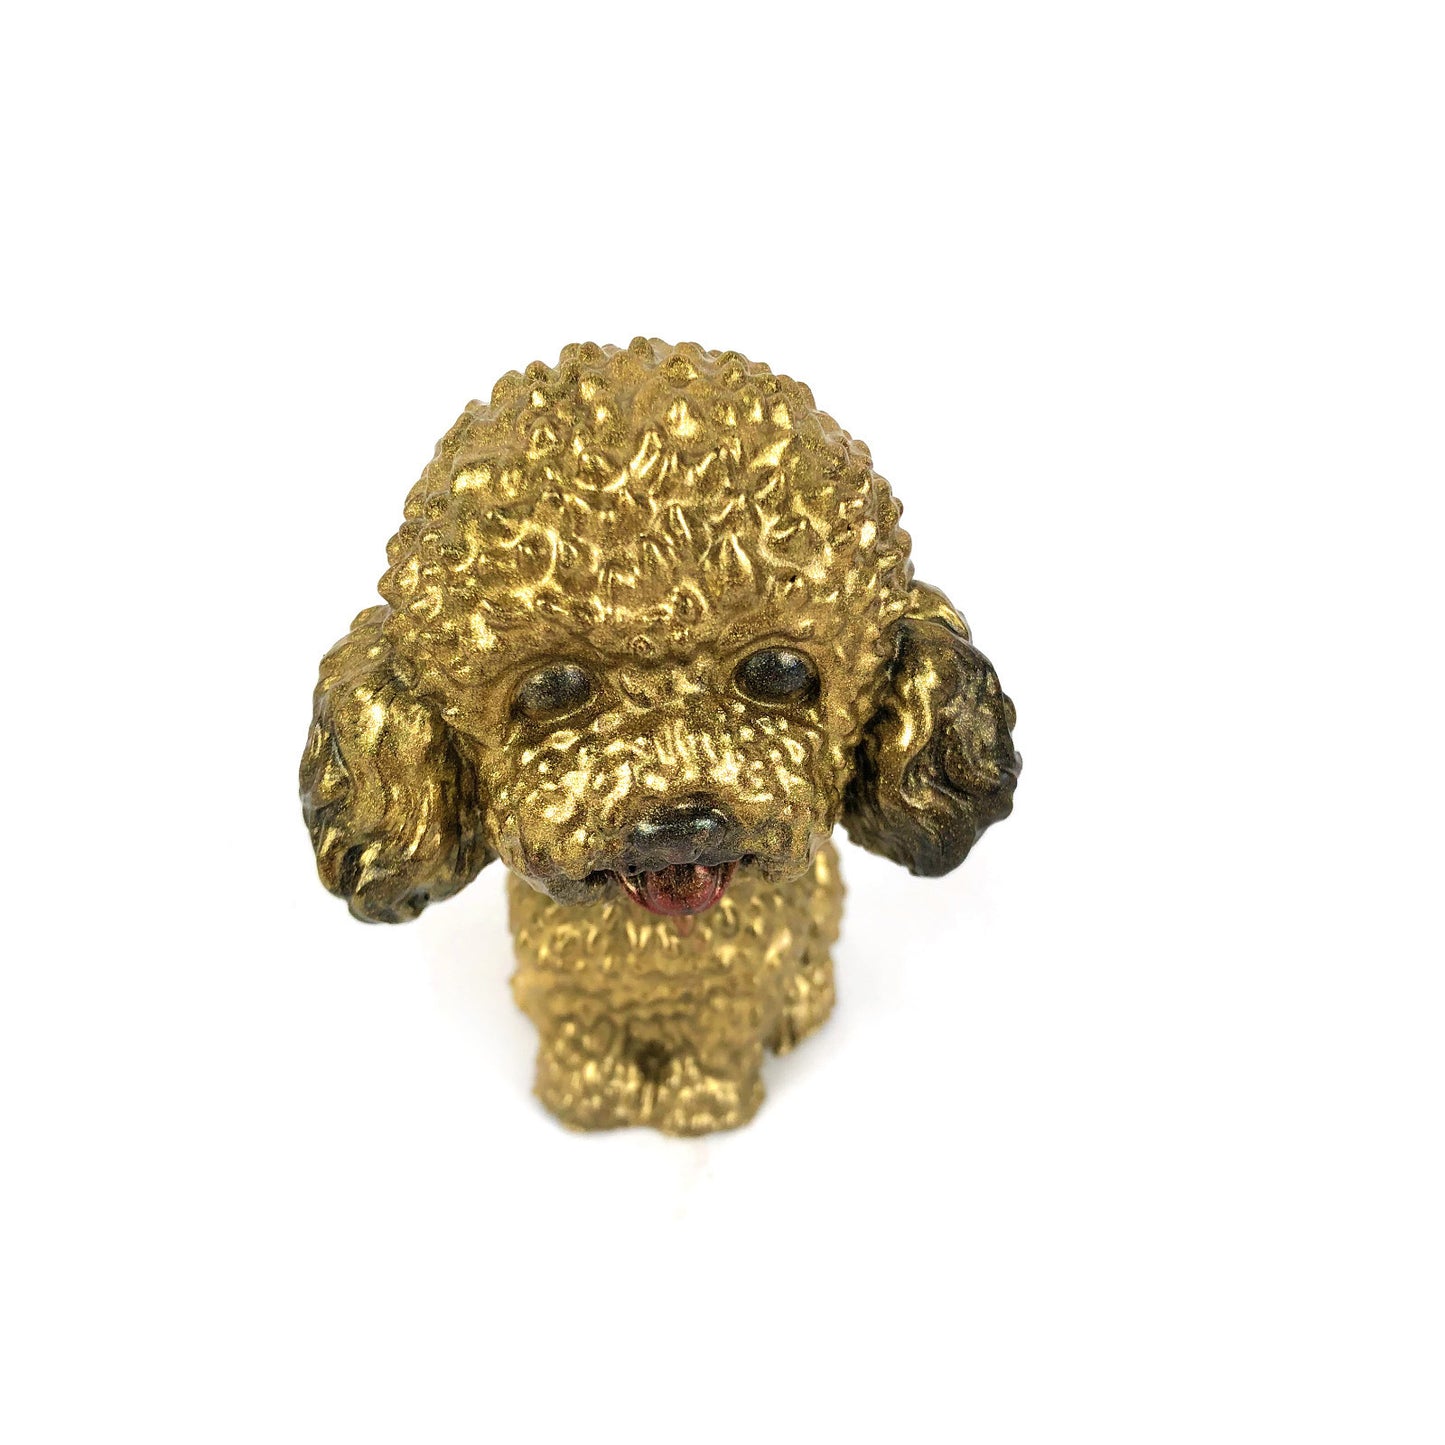 Cute Teddy Dog Ornament Resin Mold